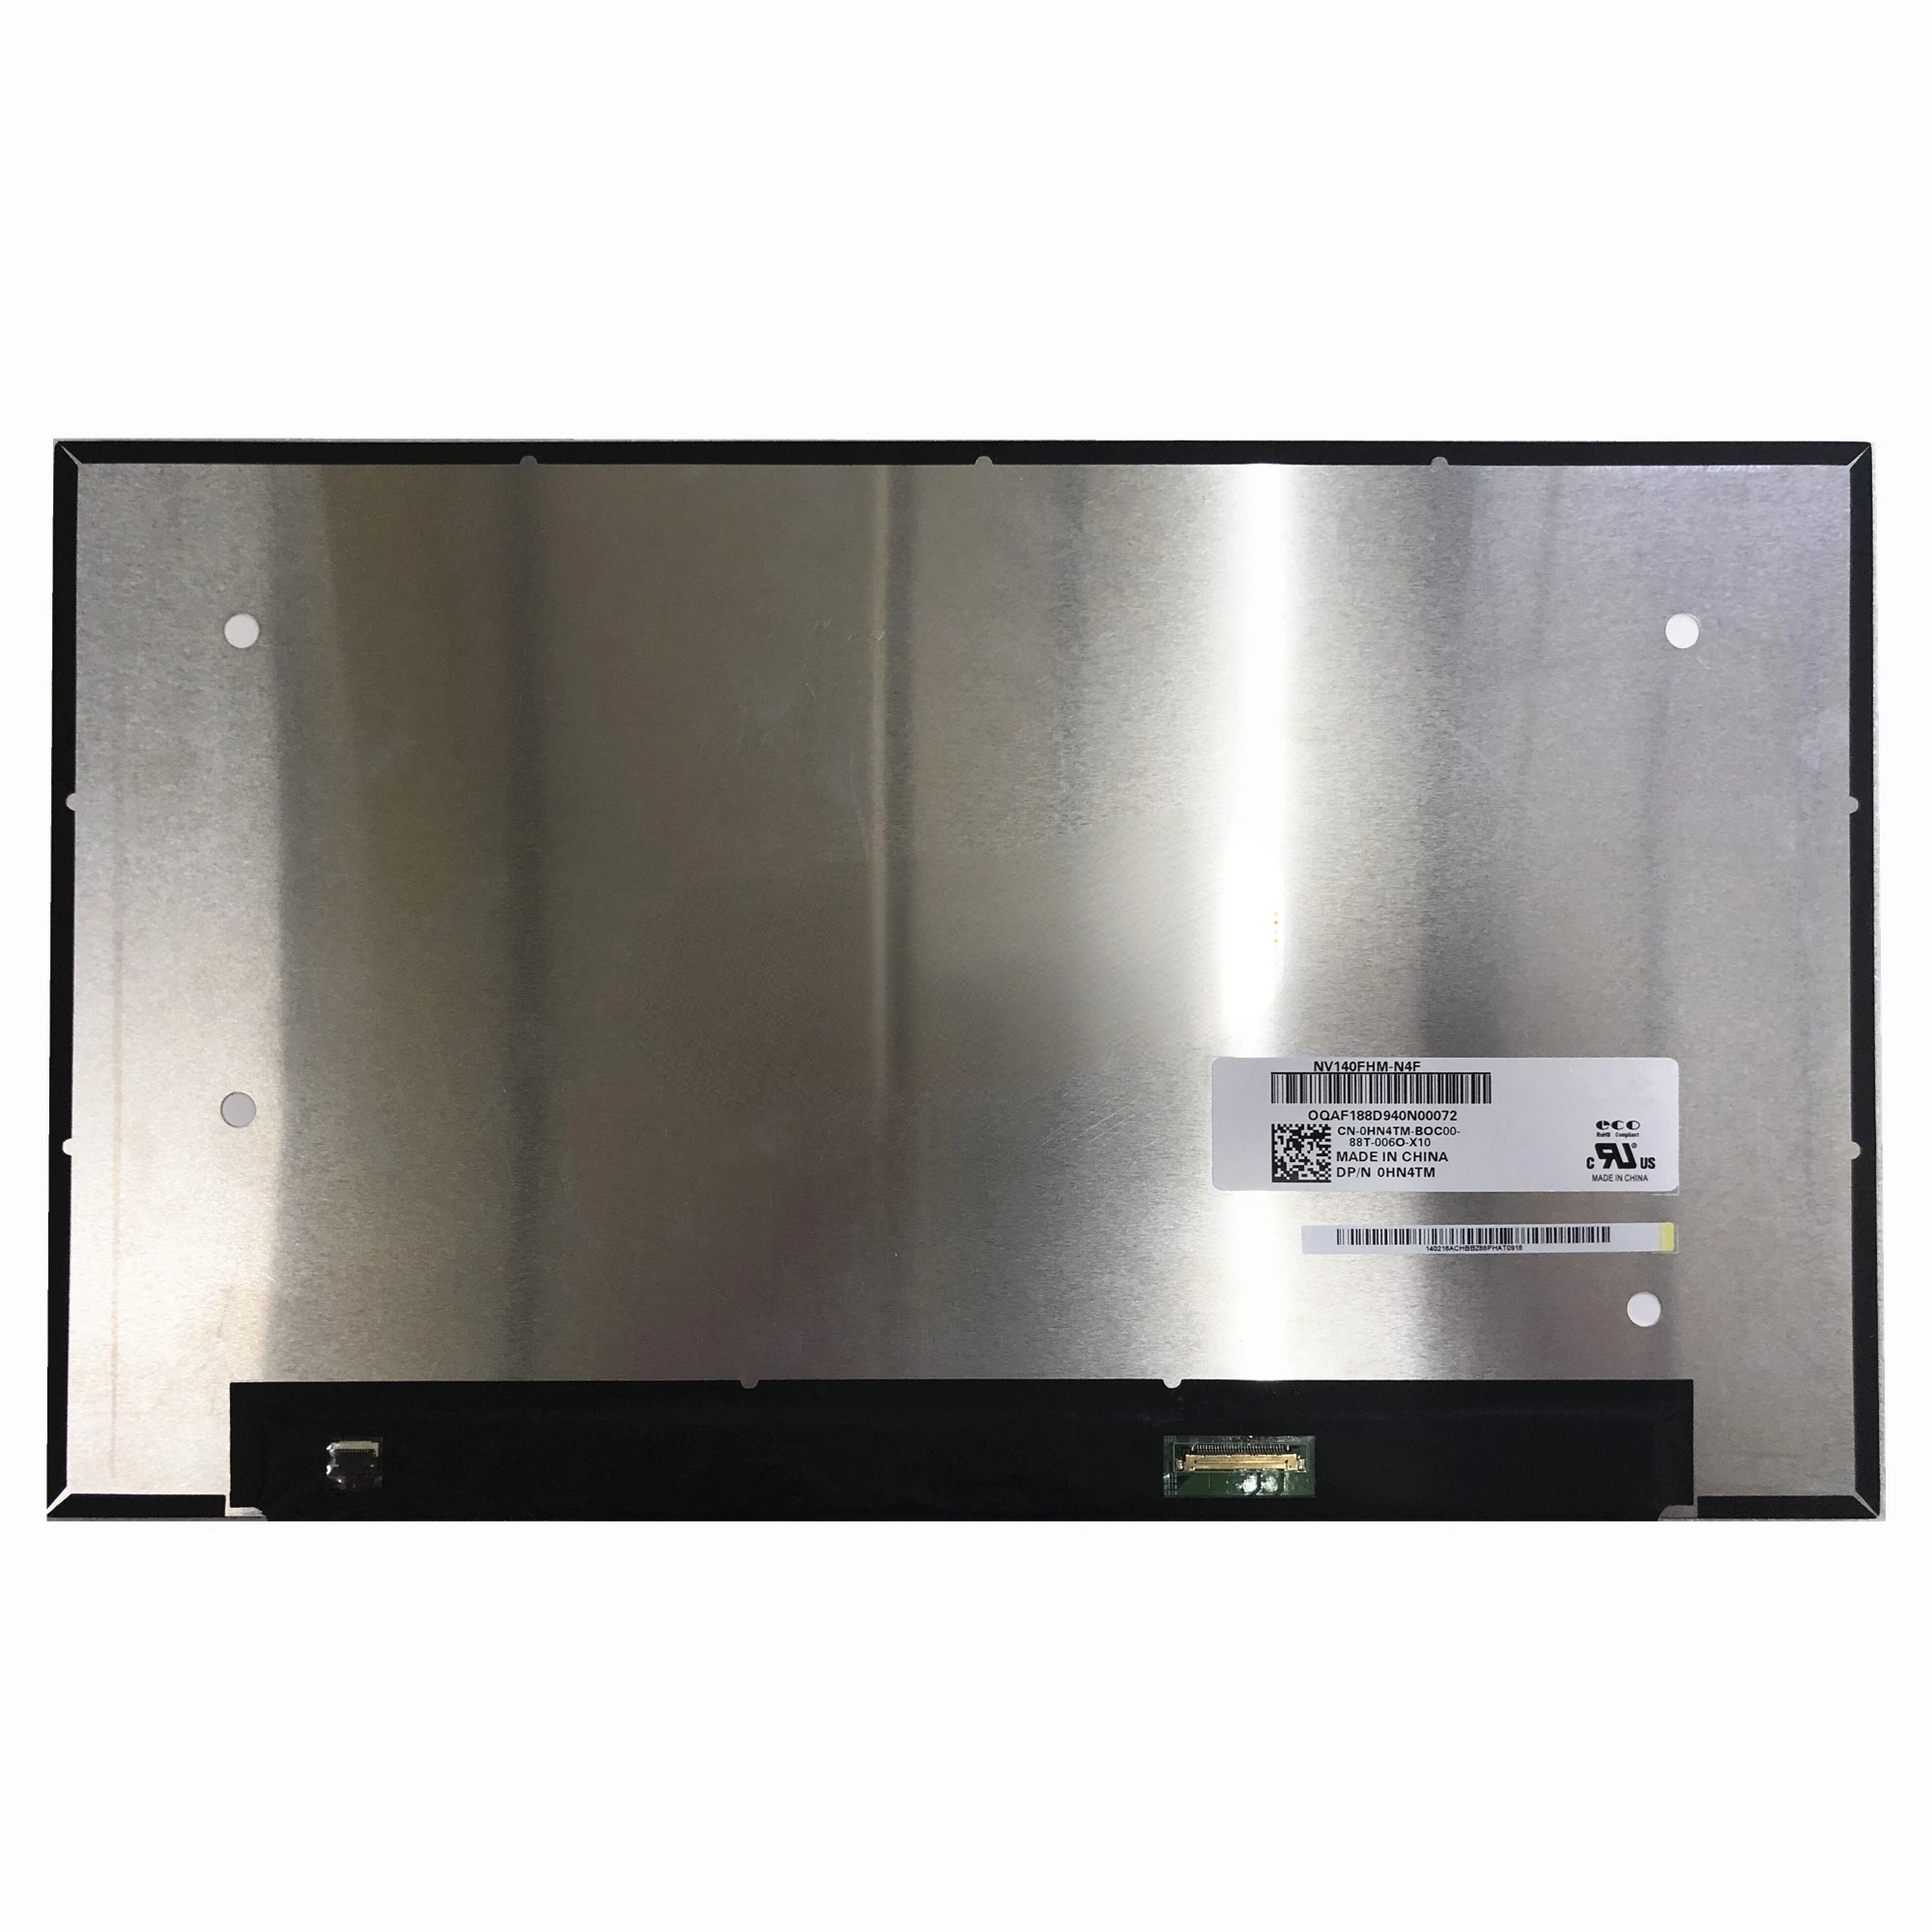 

NV140FHM-N4F NV140FHM N47 LED LCD SCREEN PANEL DISPLAY Matrix 1920x1080